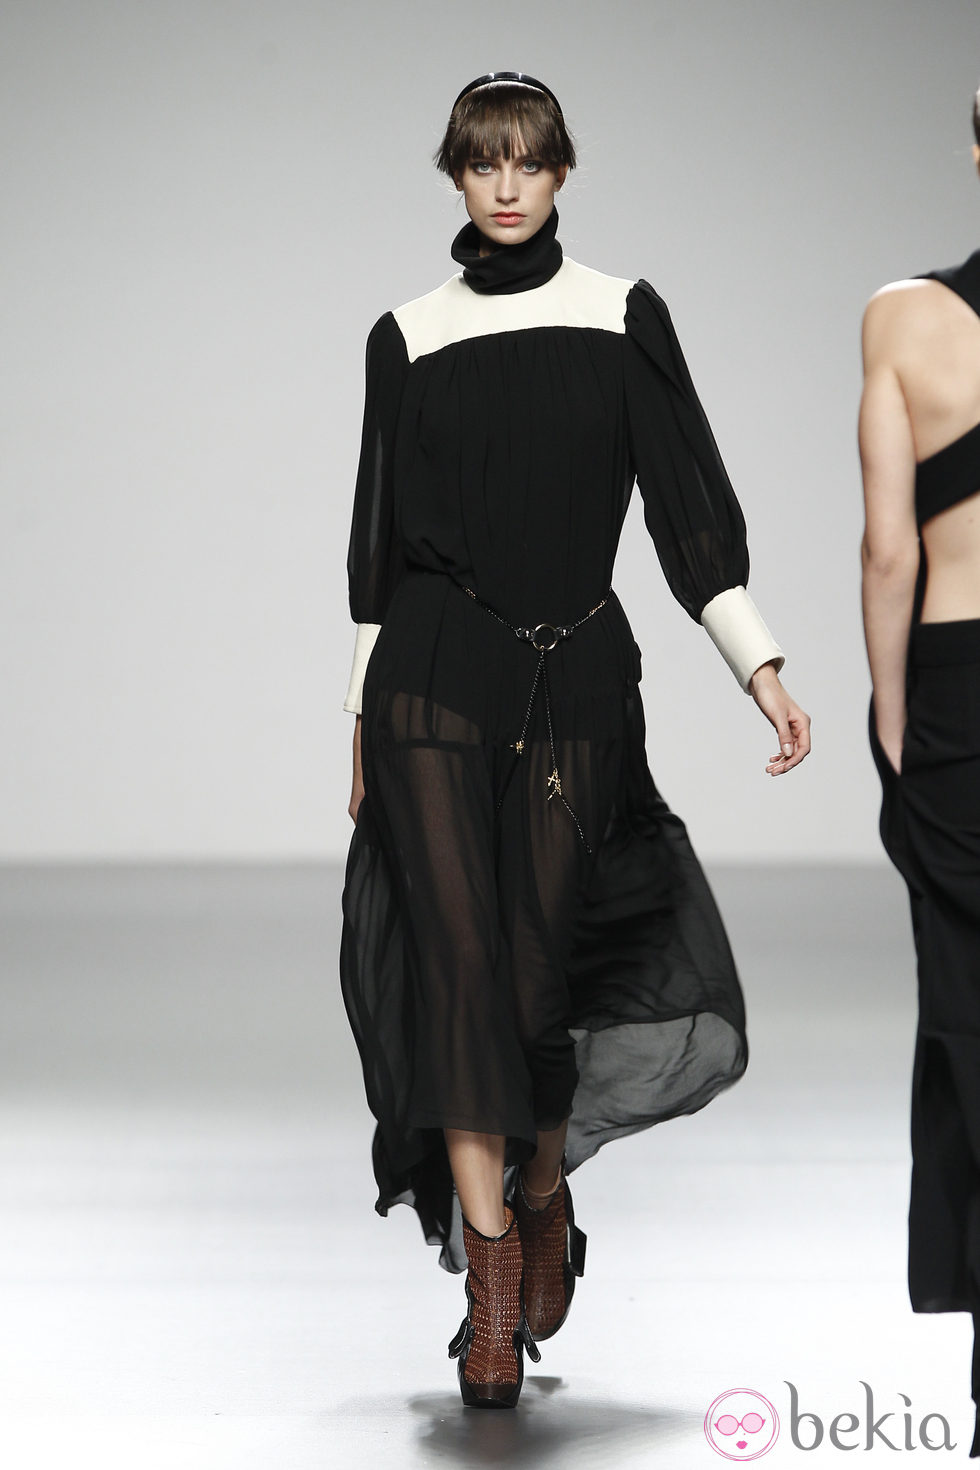 Diseño vaporoso en negro de Moises Nieto en 'El Ego' de Fashion Week Madrid